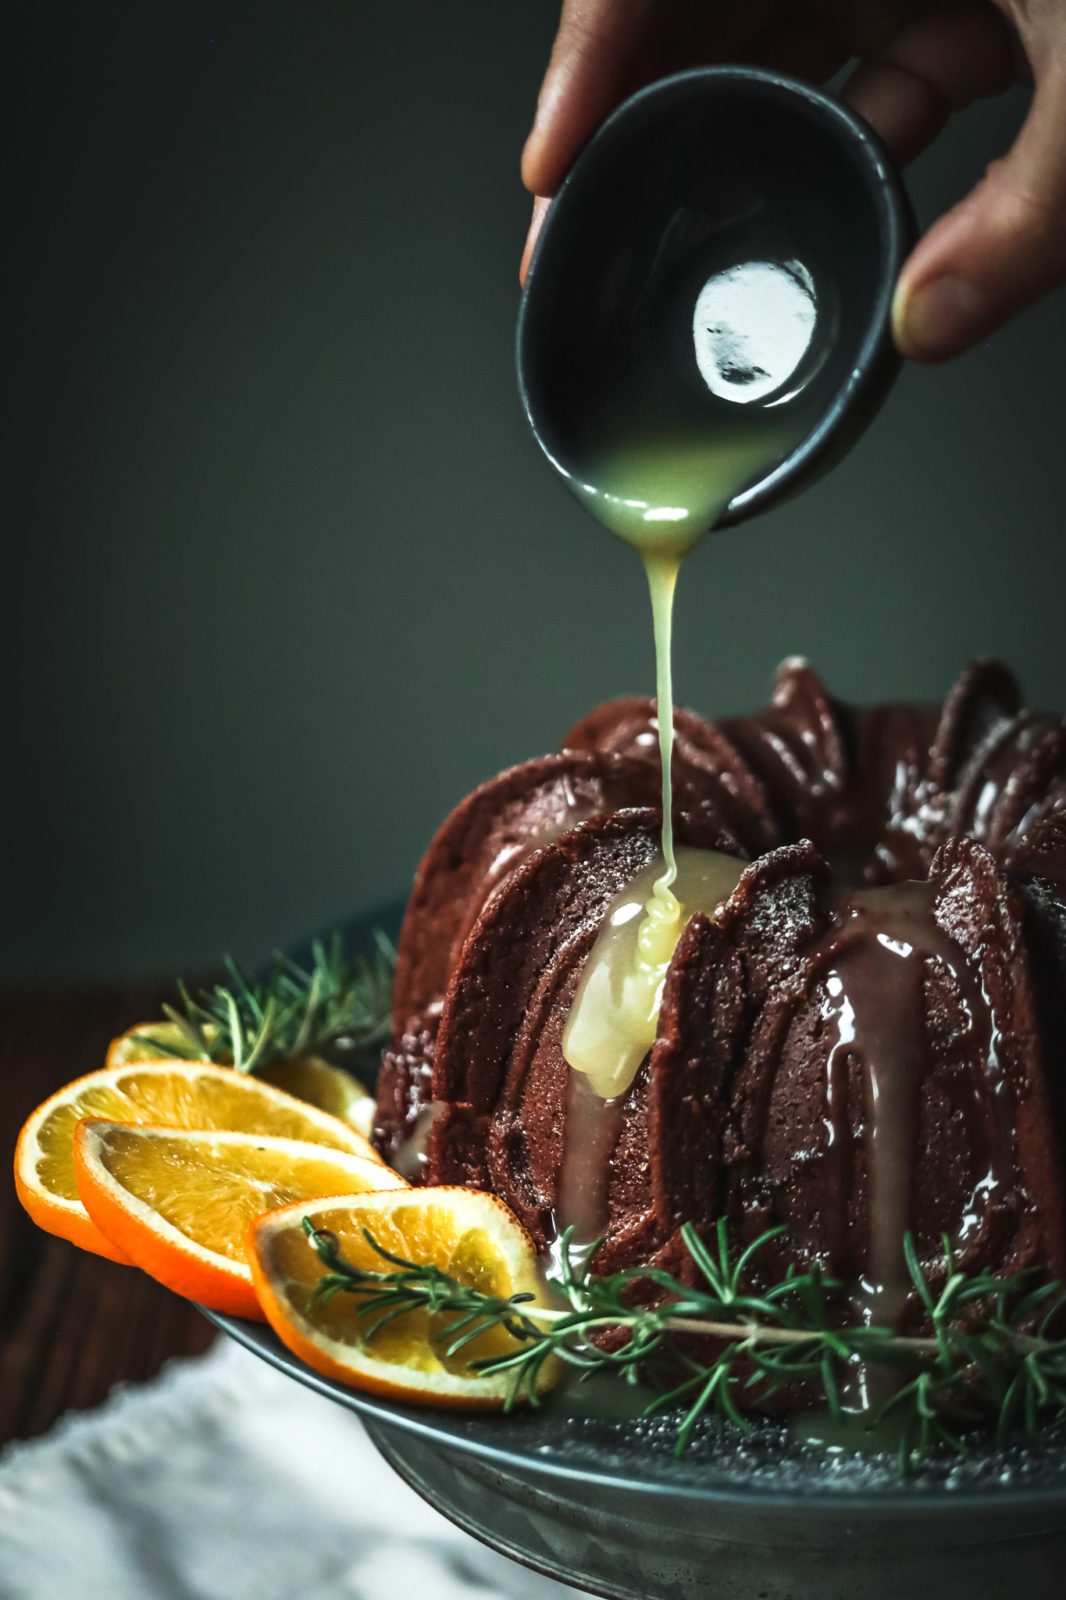 Chocolate orange bundt cake with orange flavored caramel sauce